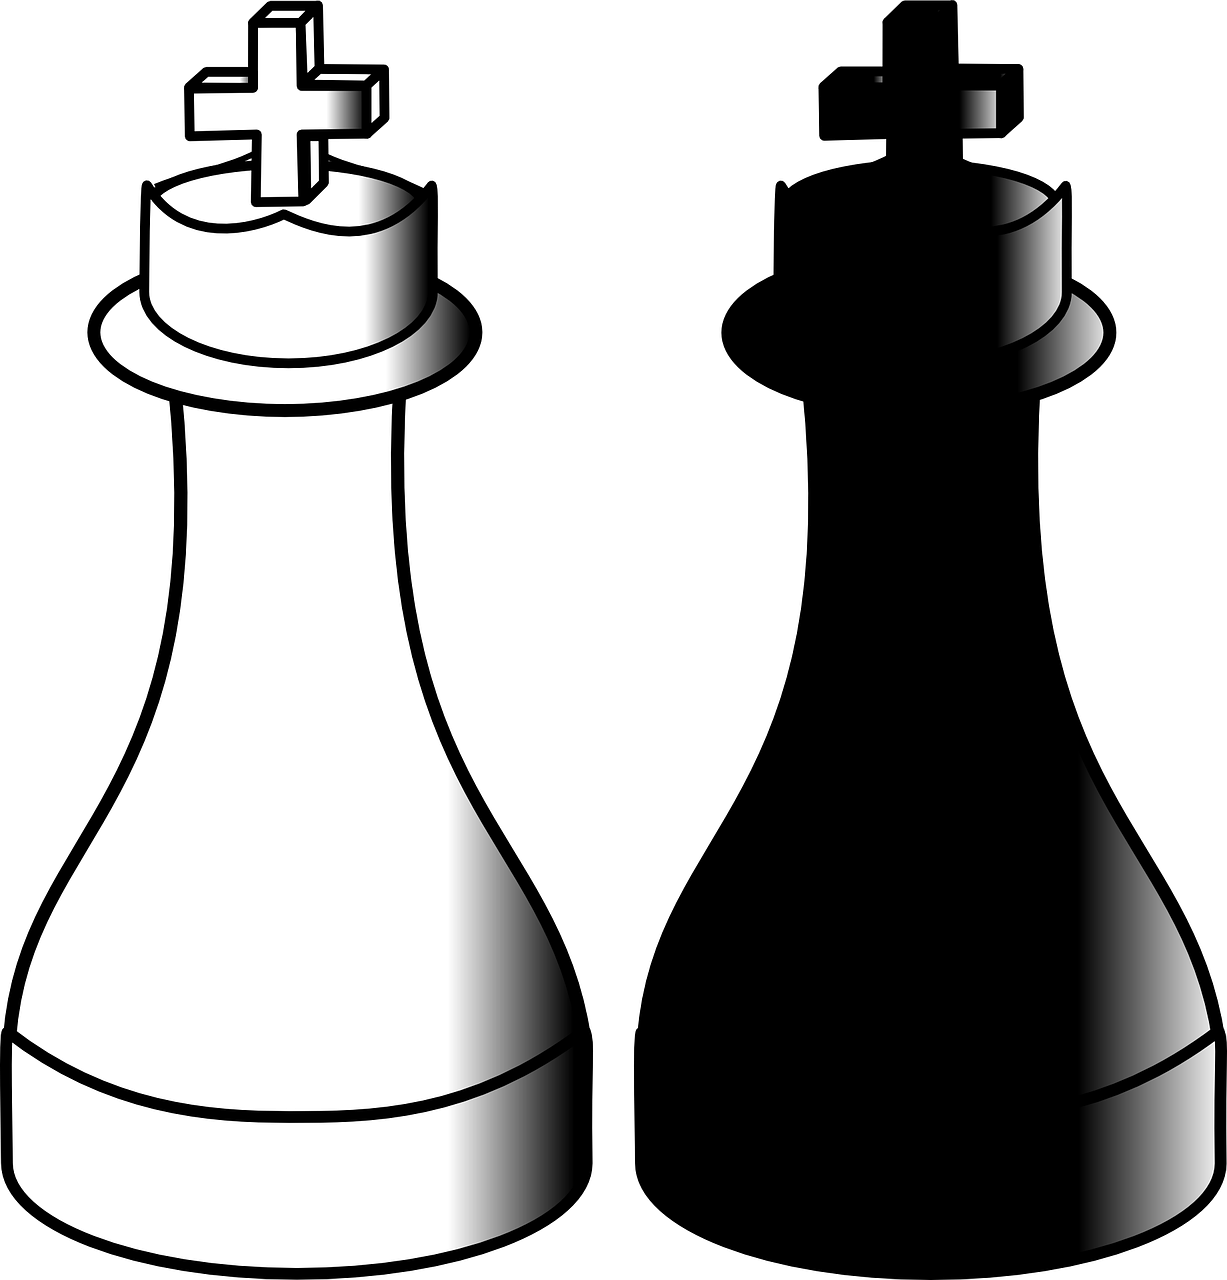 chess kings game free photo